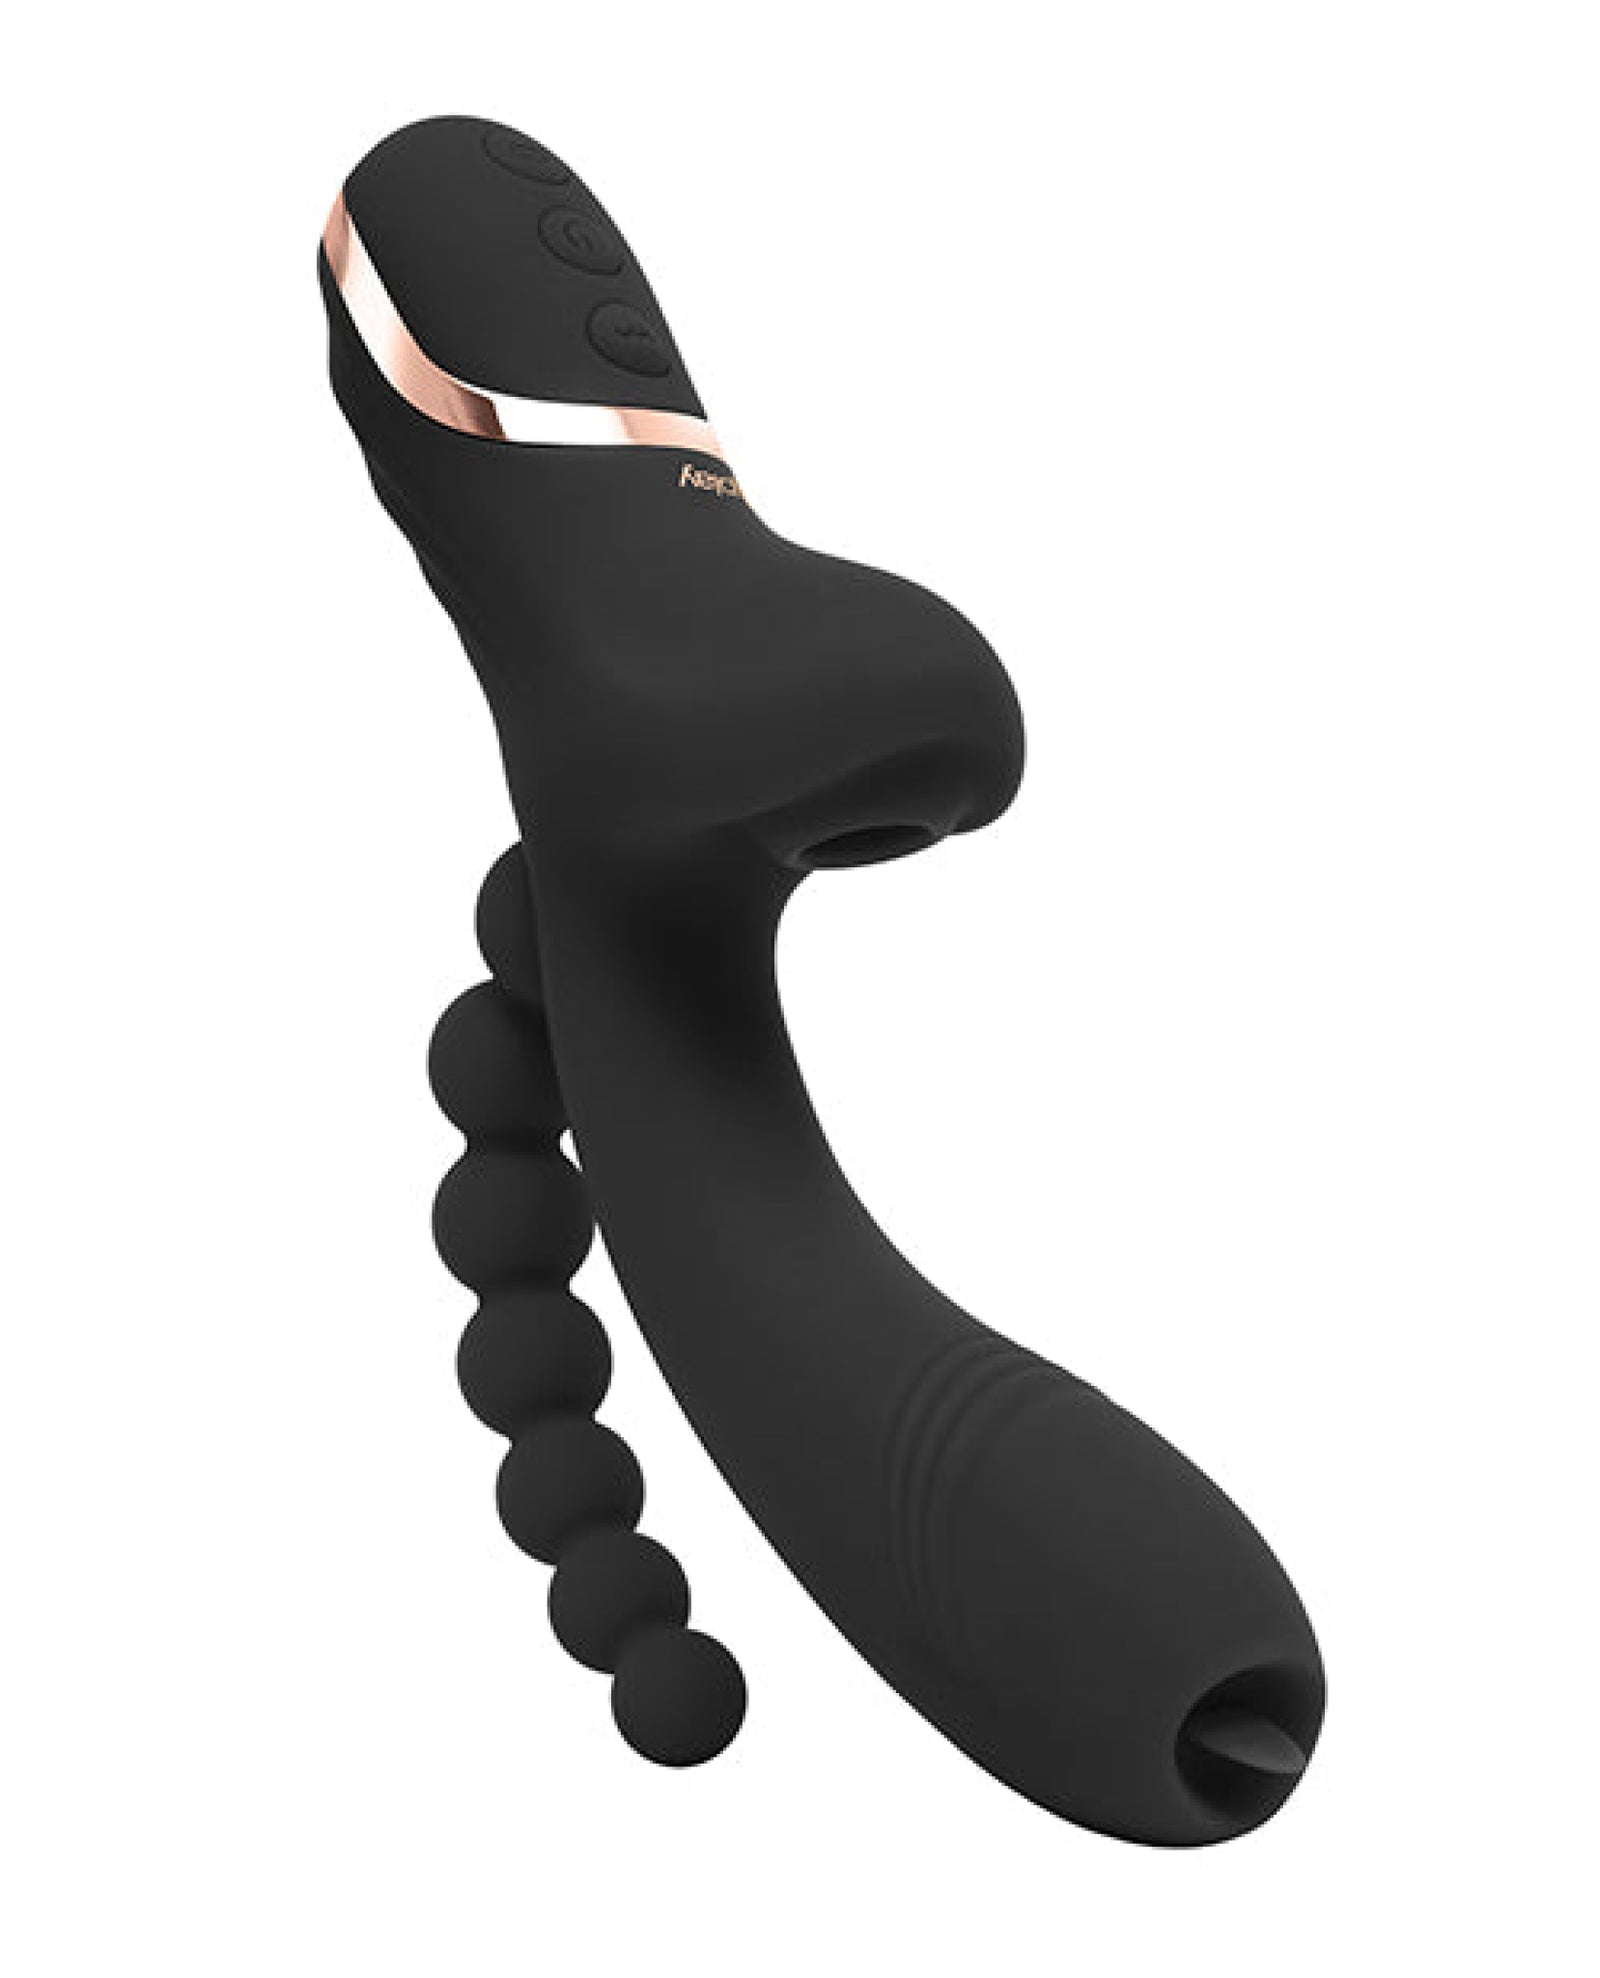 Xgen Bodywand G-play Triple Stimulation Squirt Trainer - Black Xgen